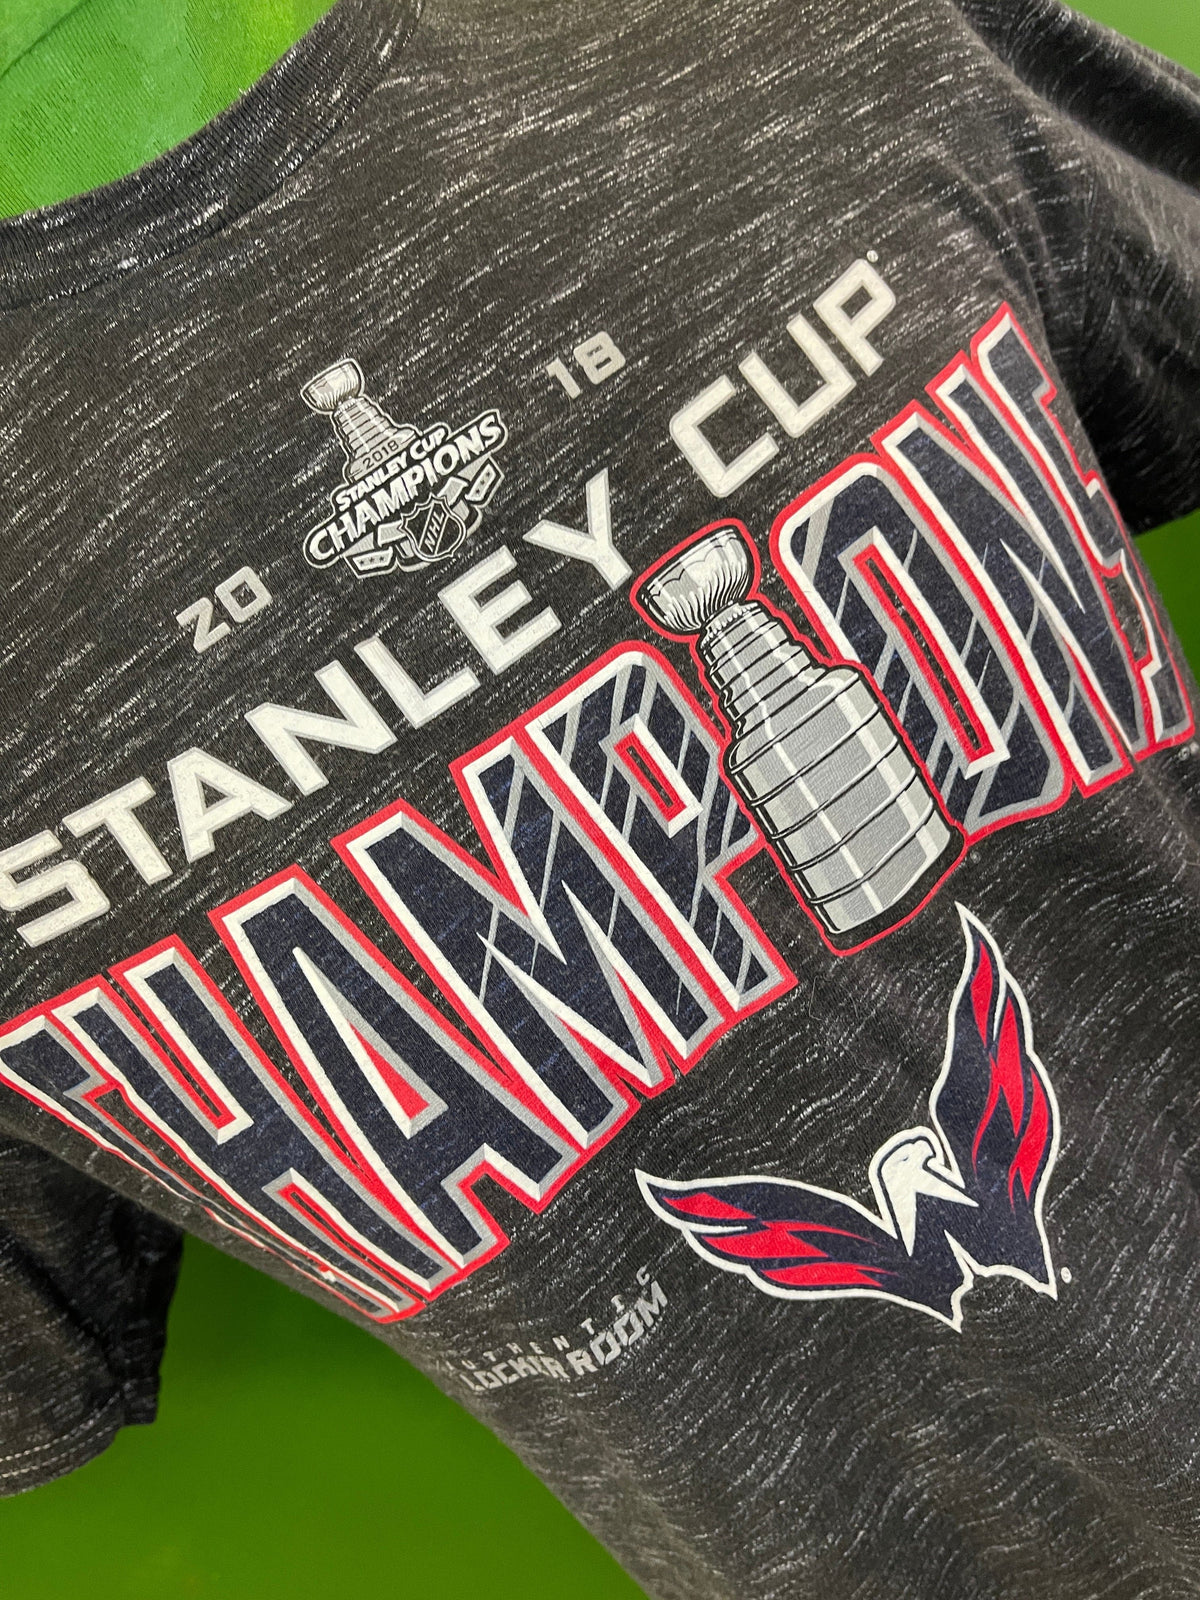 NHL Washington Capitals Fanatics 2018 Stanley Cup Champions T-Shirt Men's Medium